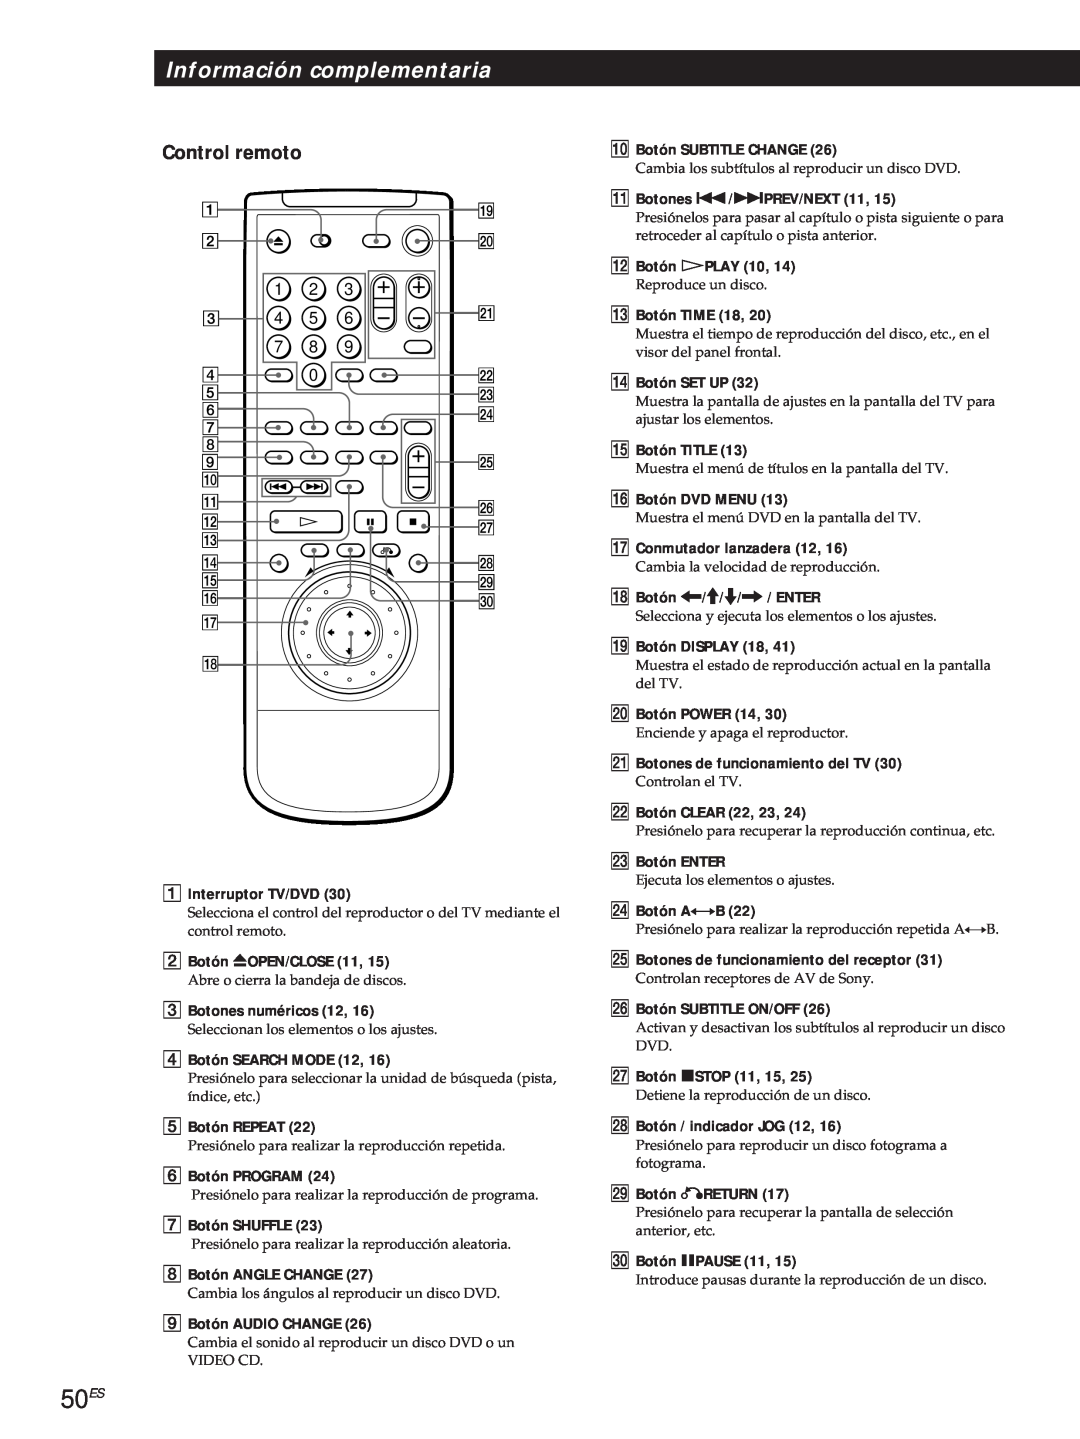 Sony DVP-S500D 50ES, Control remoto, Información complementaria, Interruptor TV/DVD, 2 Botón 6OPEN/CLOSE 11, Botón TITLE 